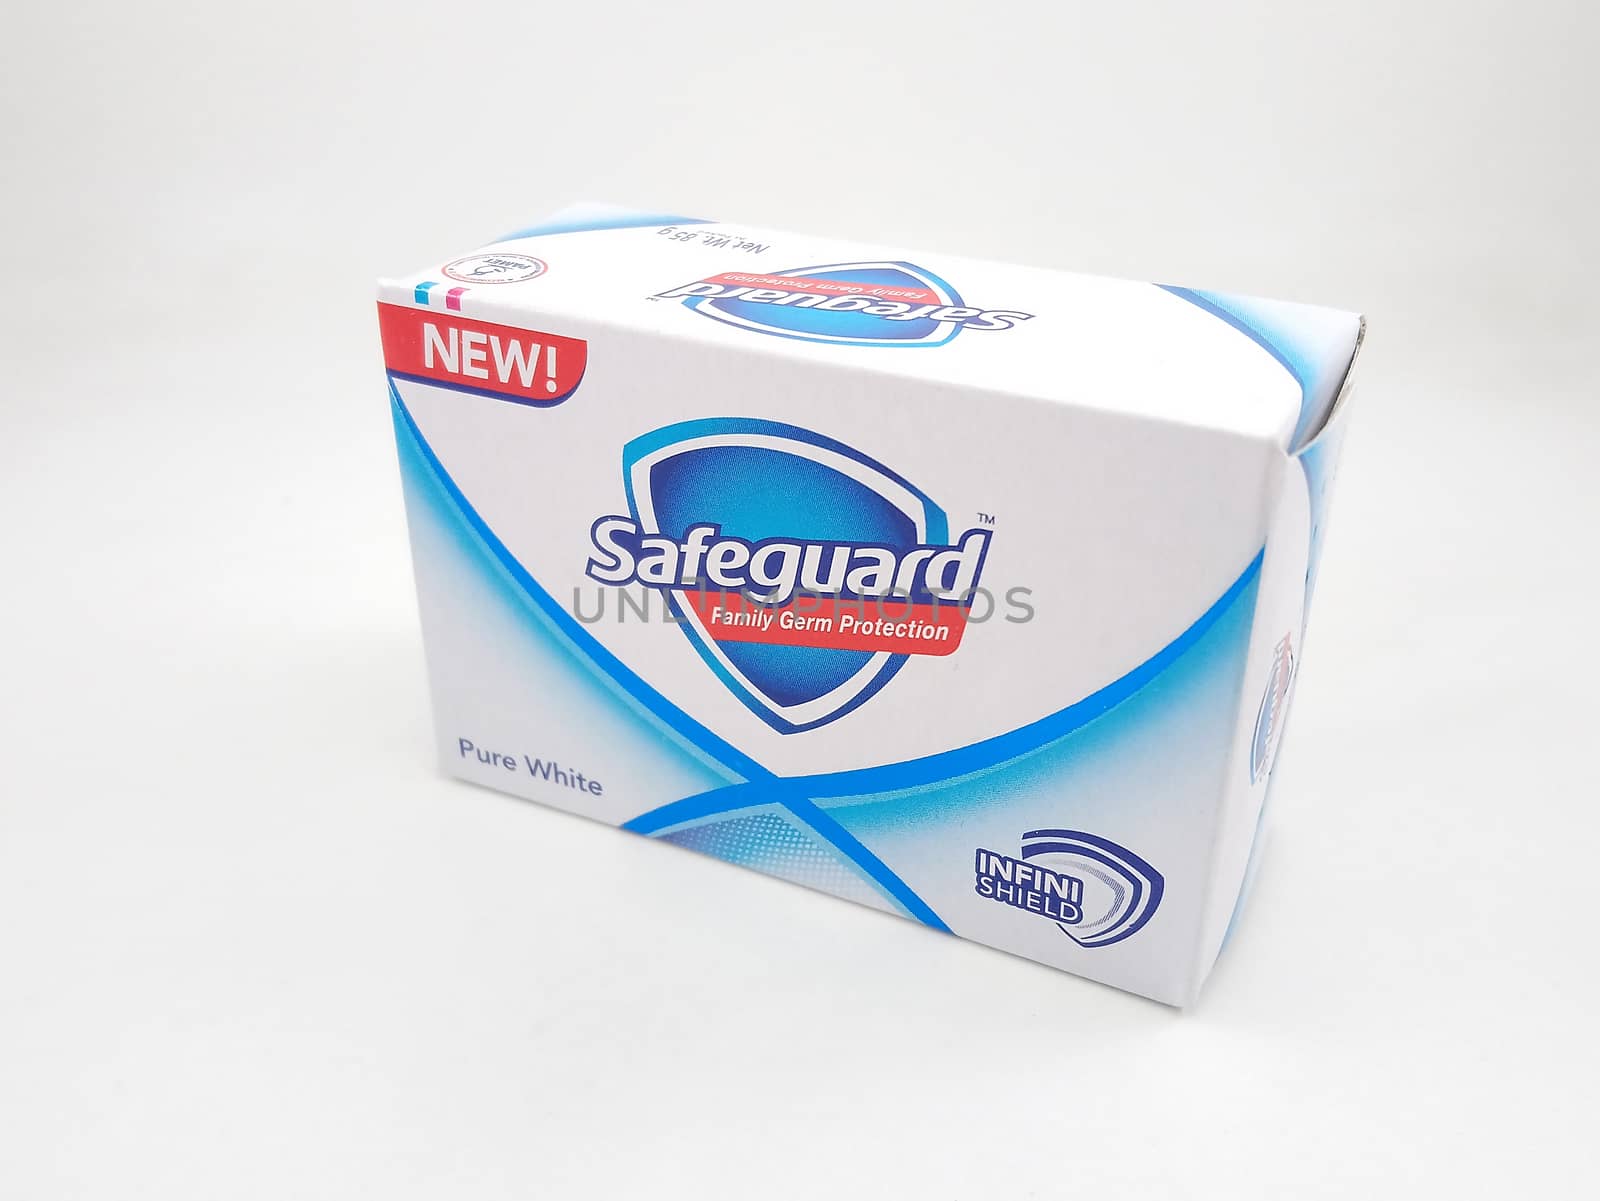  Safeguard white soap in Manila, Philippines by imwaltersy